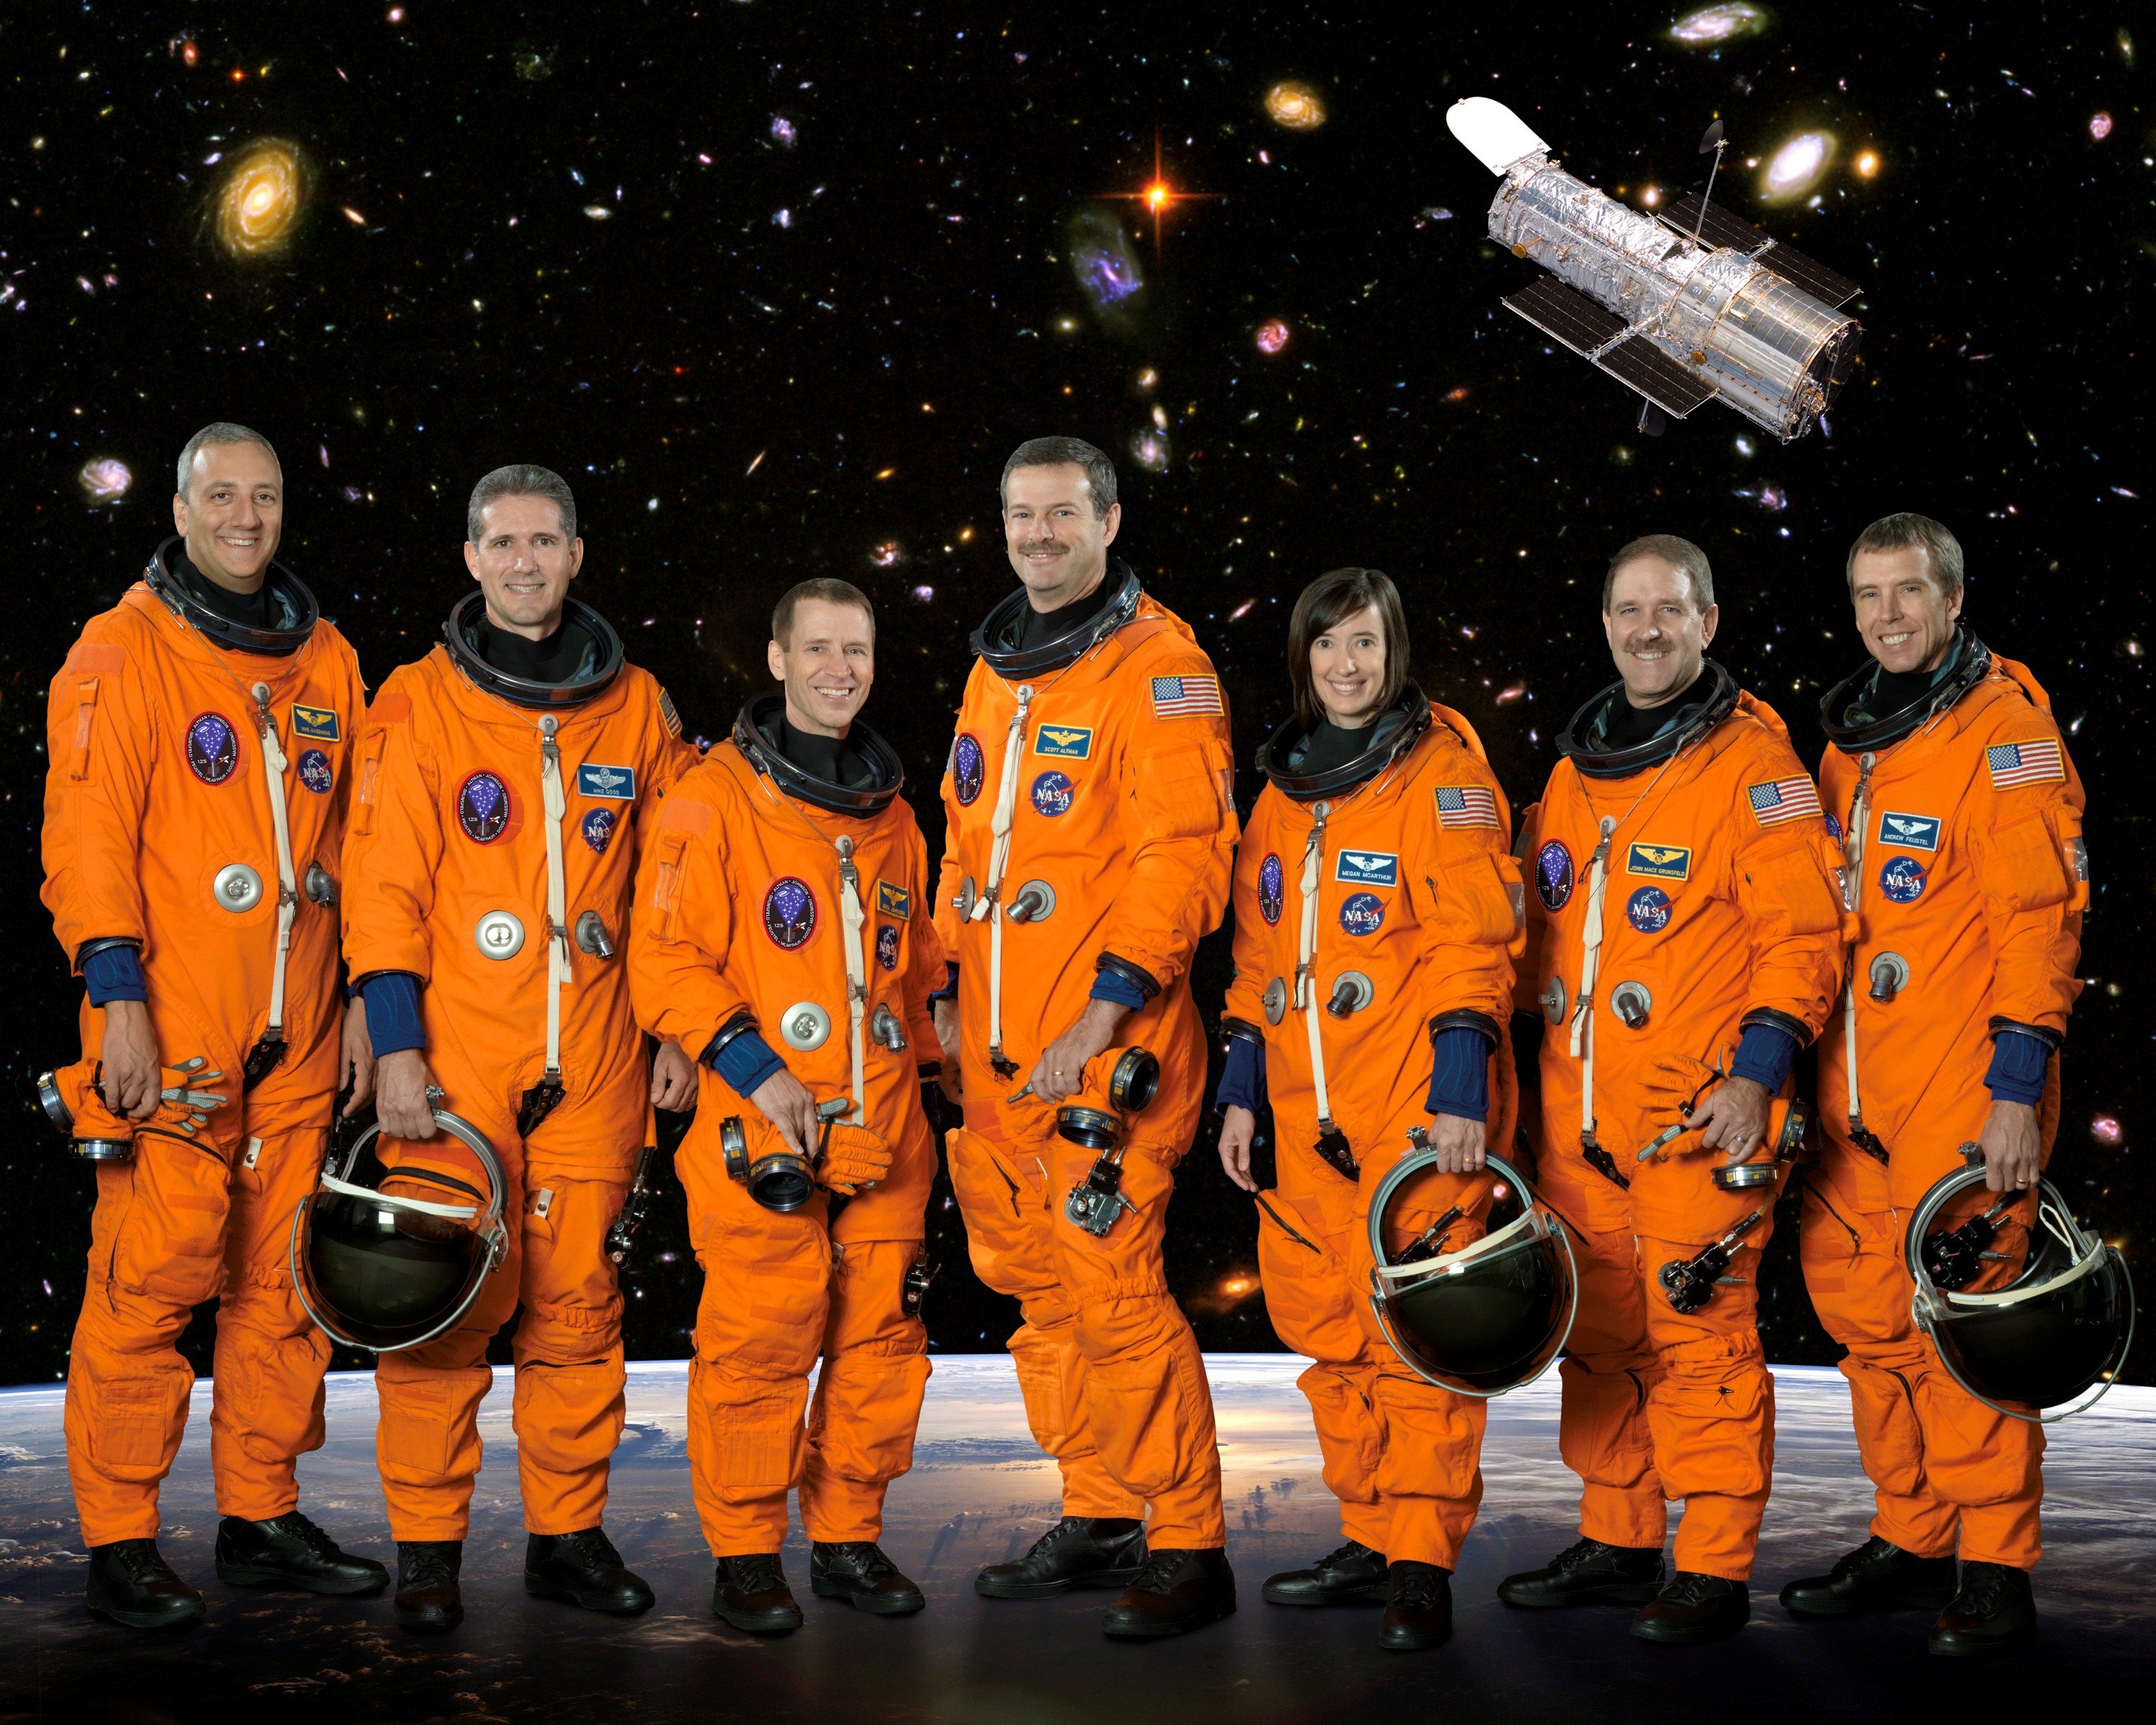 The STS-125 crew of Michael J. Massimino, left, Michael T. Good, Gregory C. Johnson, Scott D. Altman, K. Megan McArthur, John M. Grunsfeld, and Andrew J. Feustel